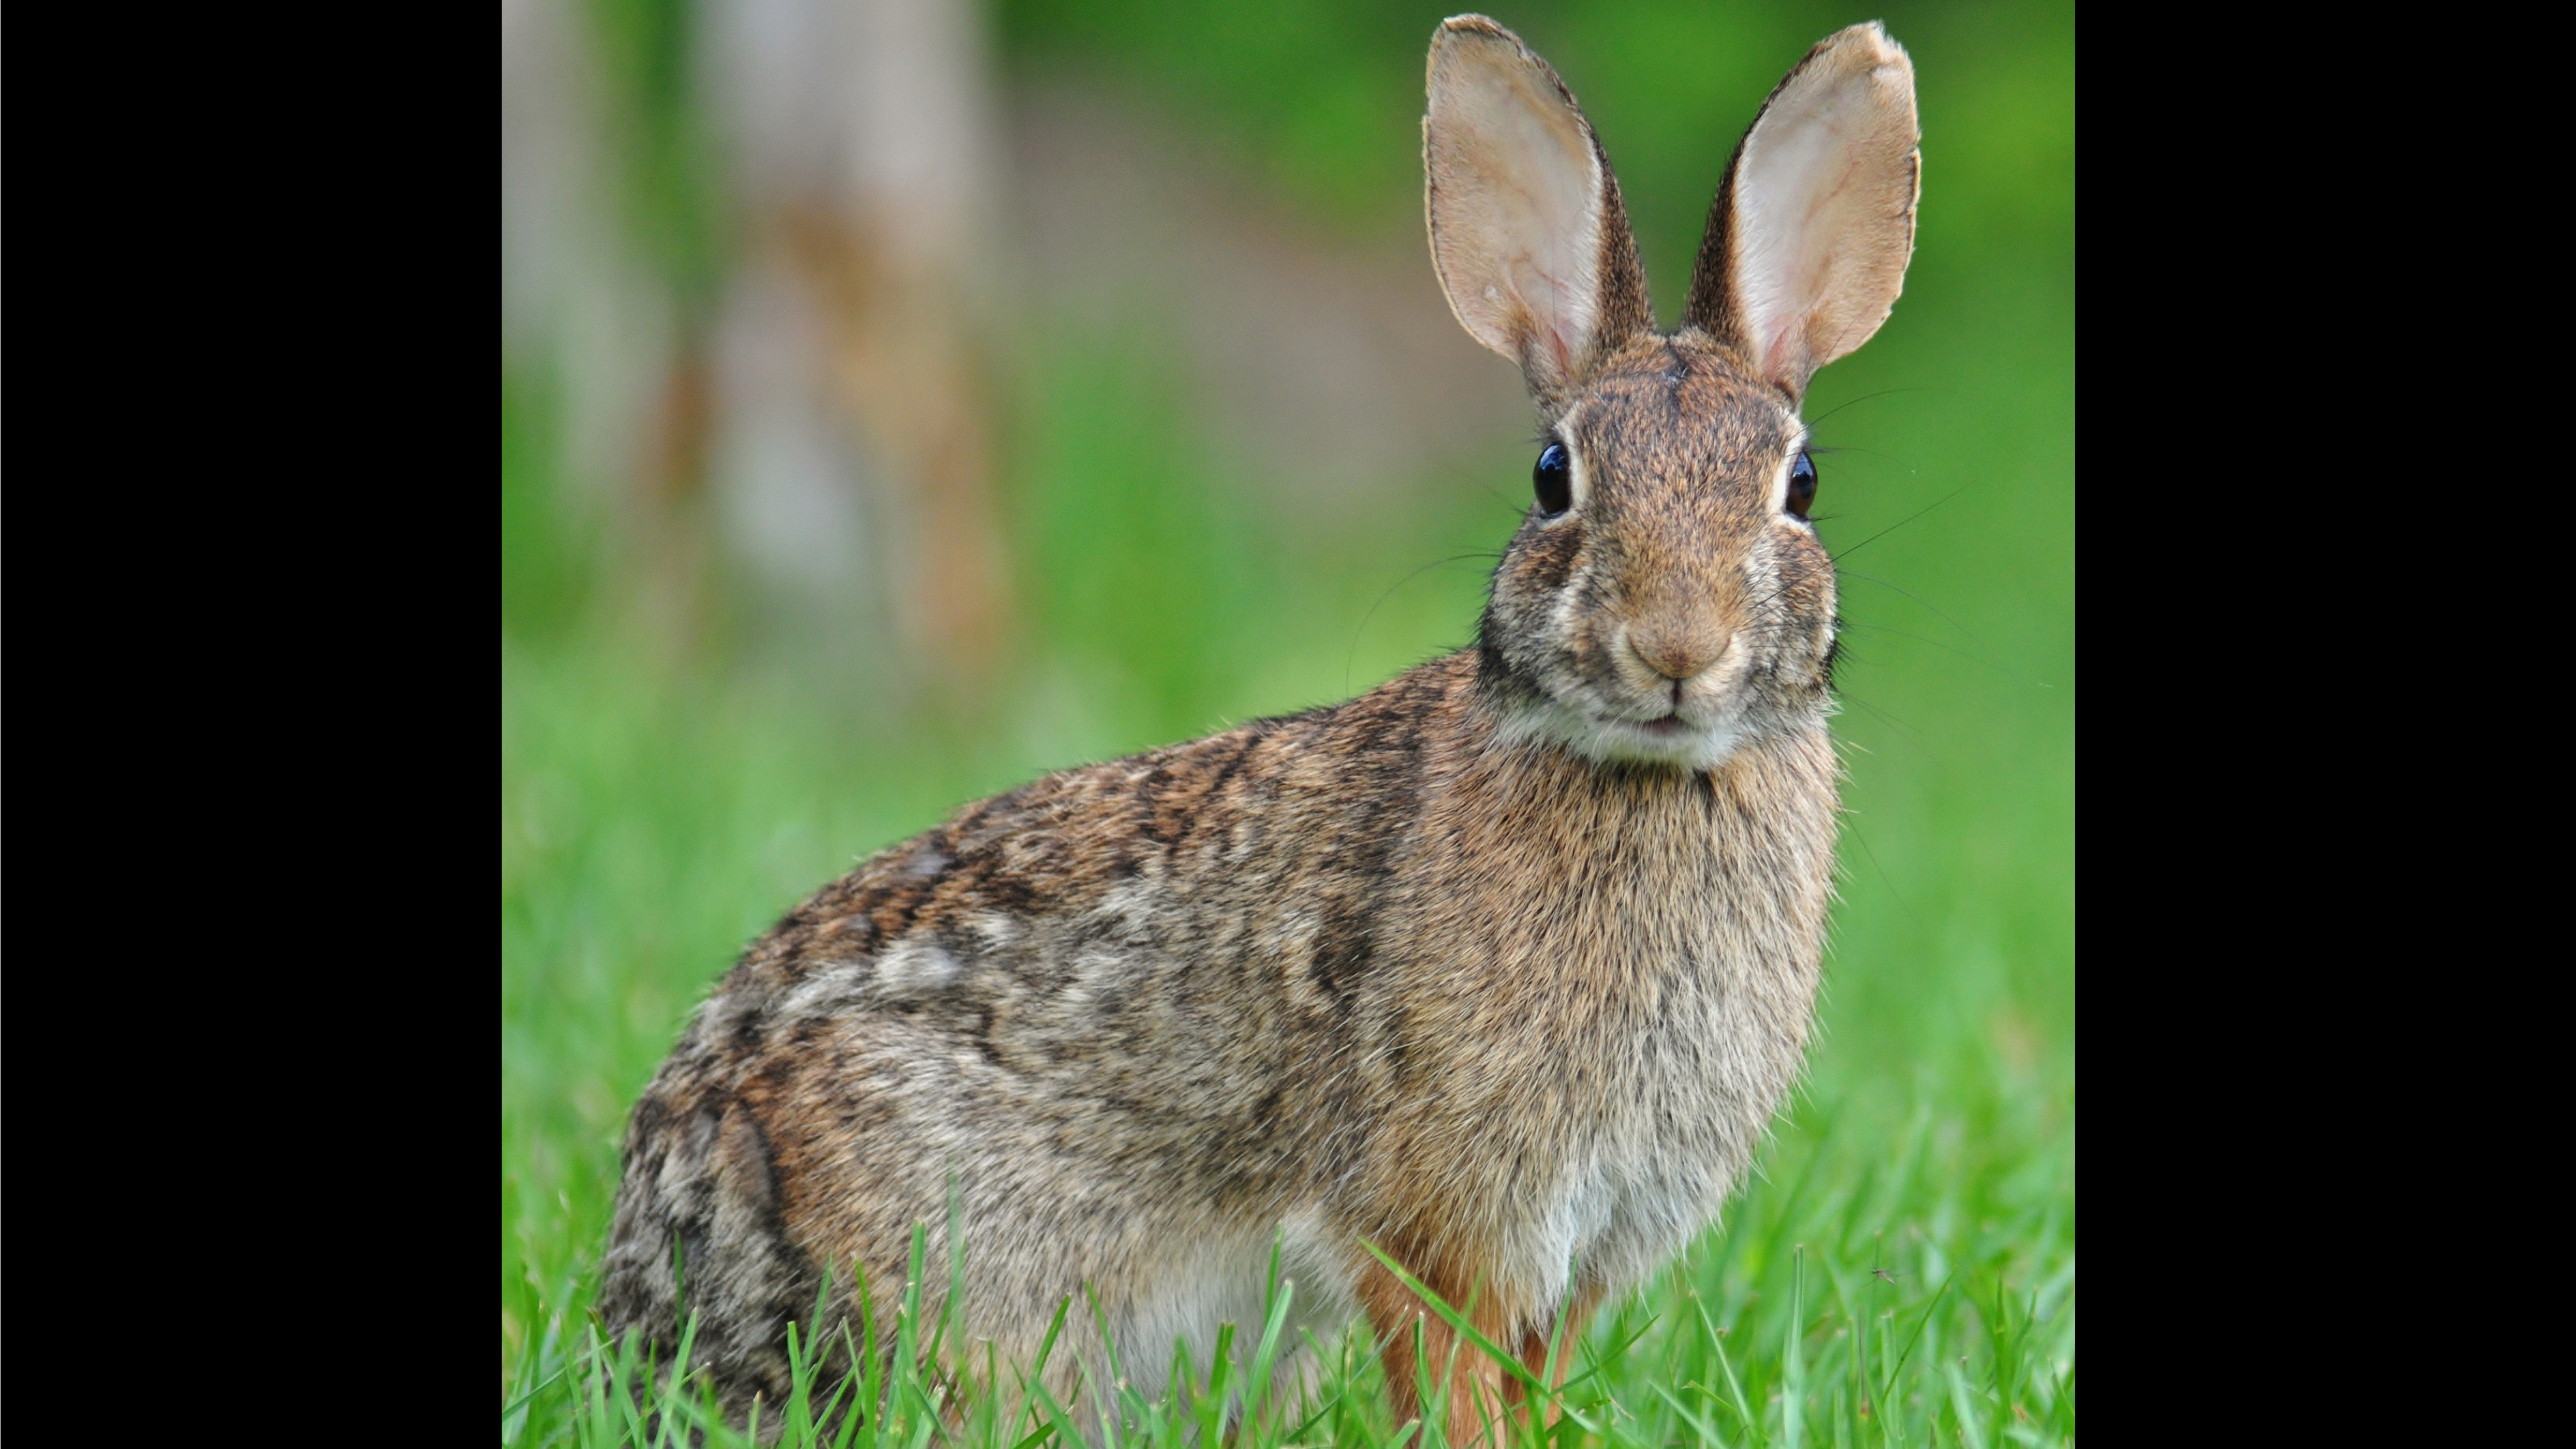 WILD GEORGIA: Rabbits' fertility makes them symbols of spring